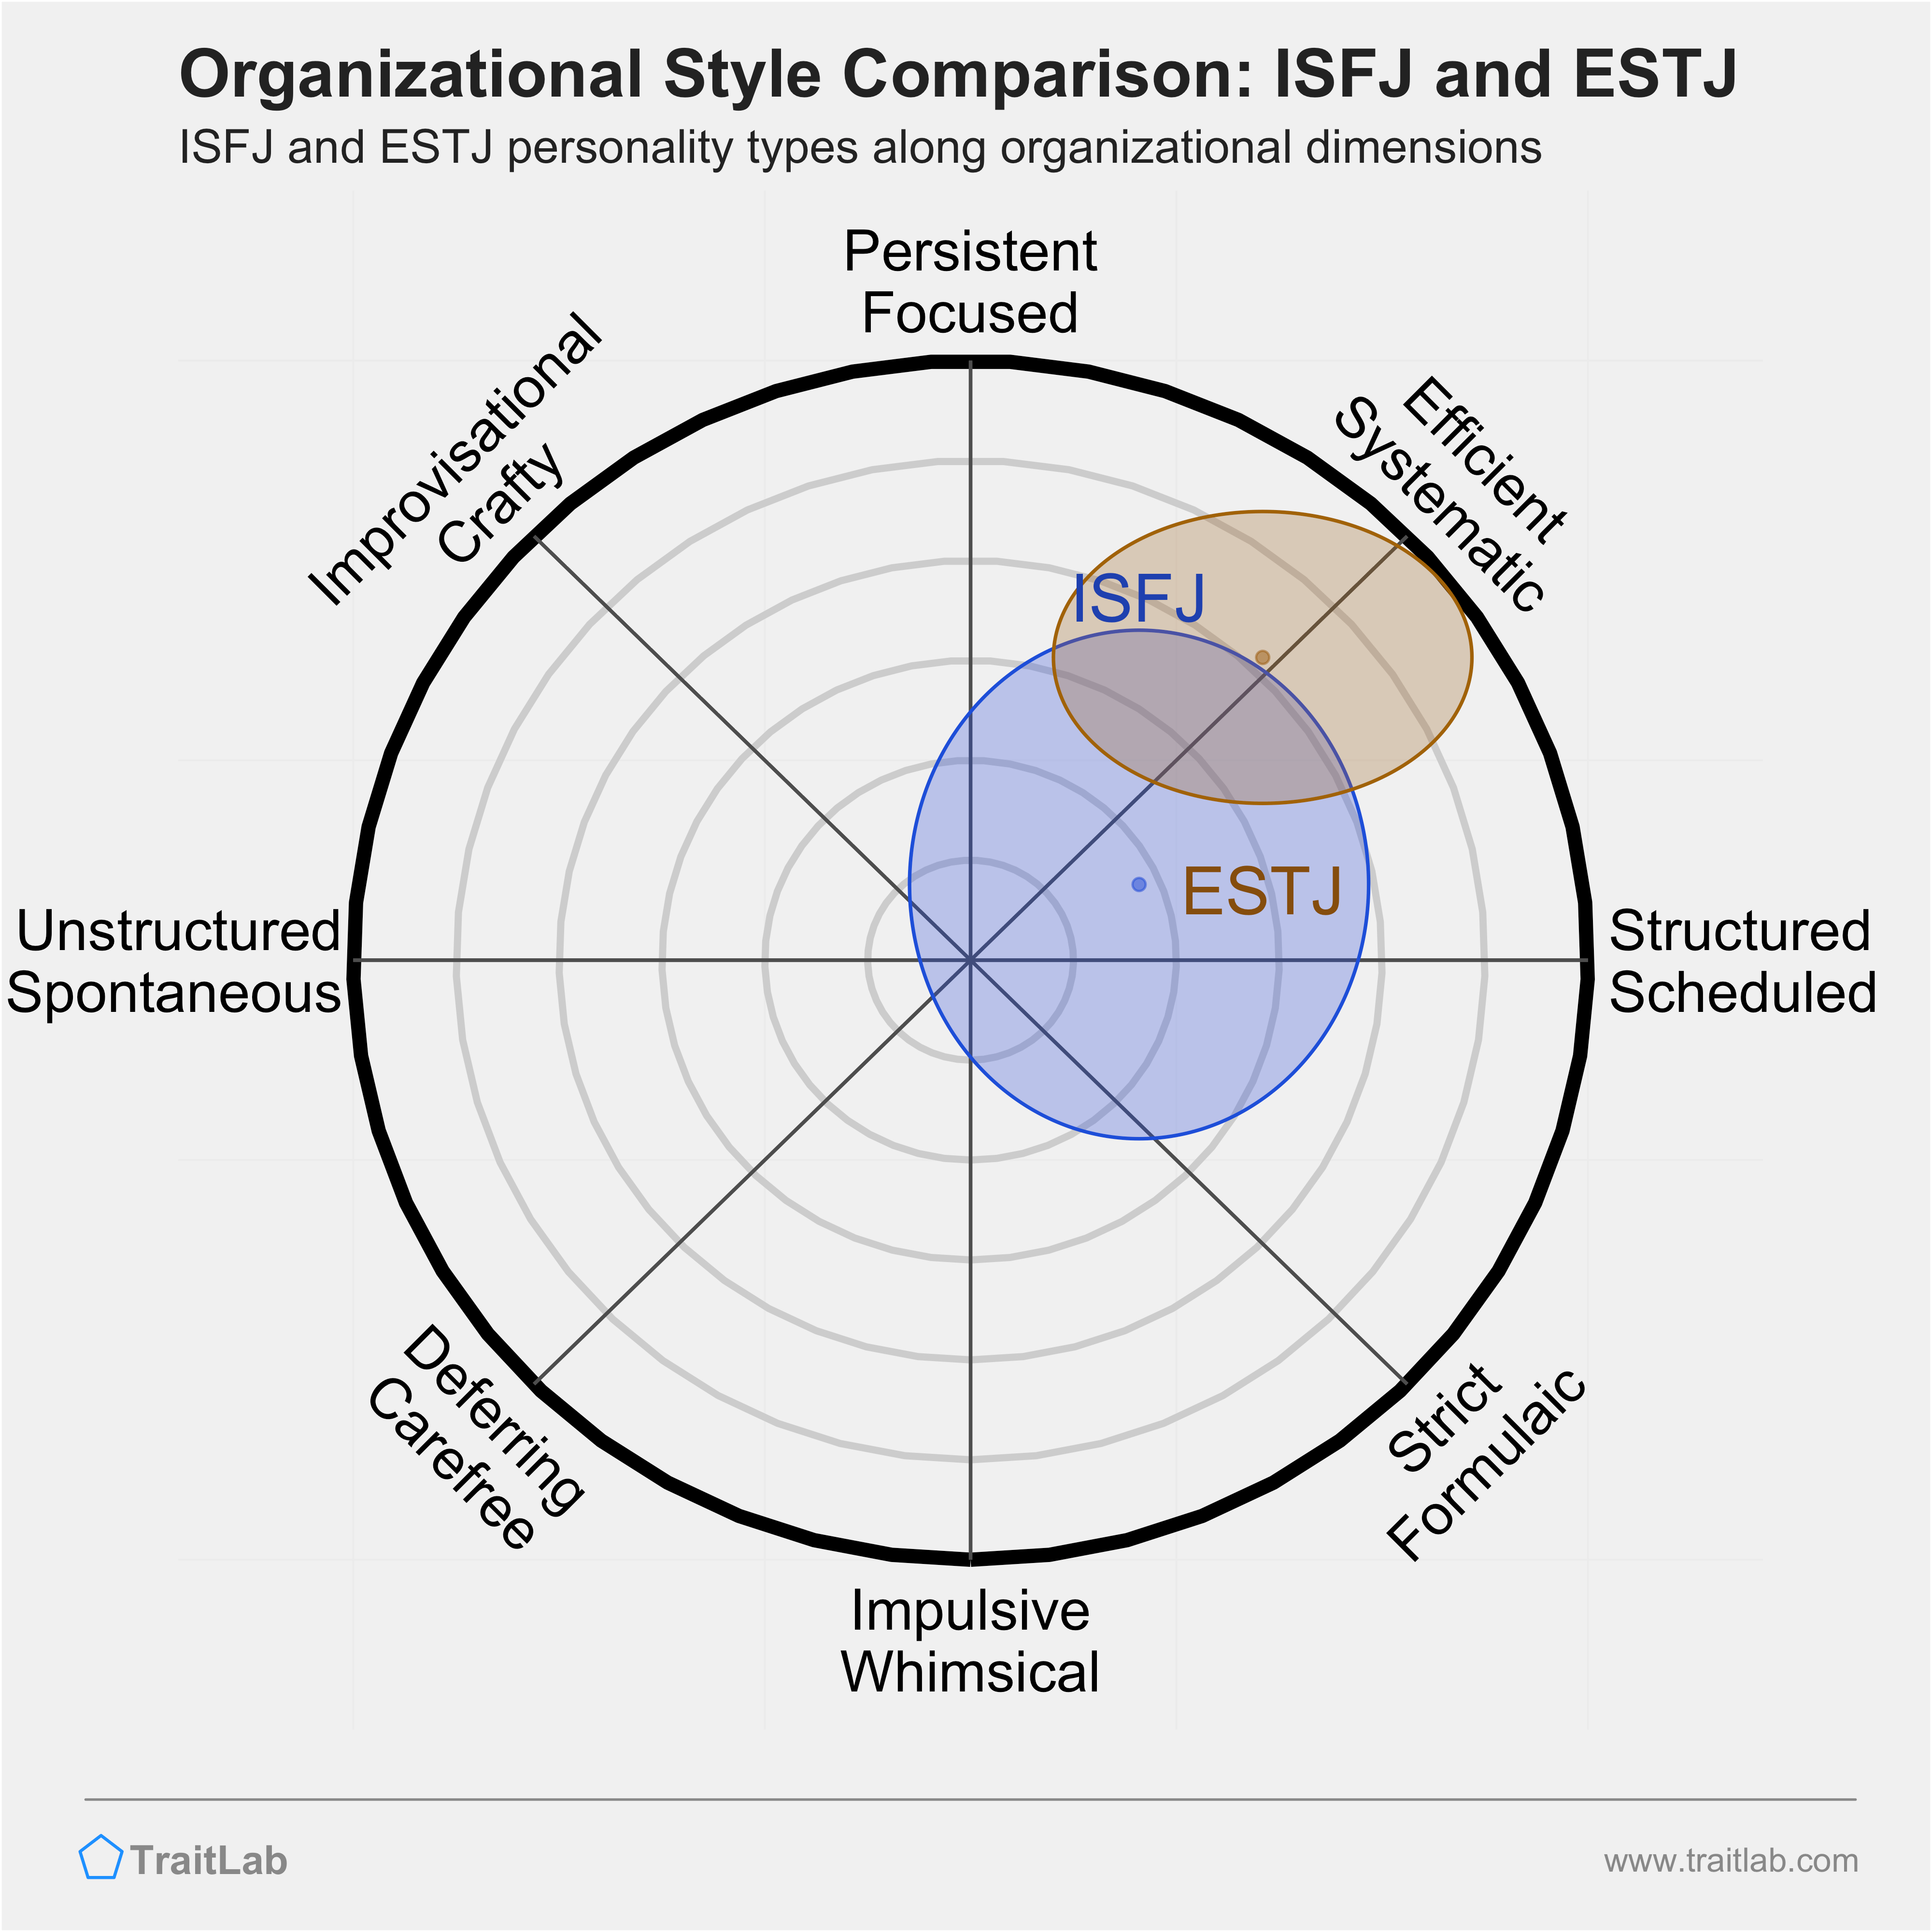 ISFJ and ESTJ comparison across organizational dimensions